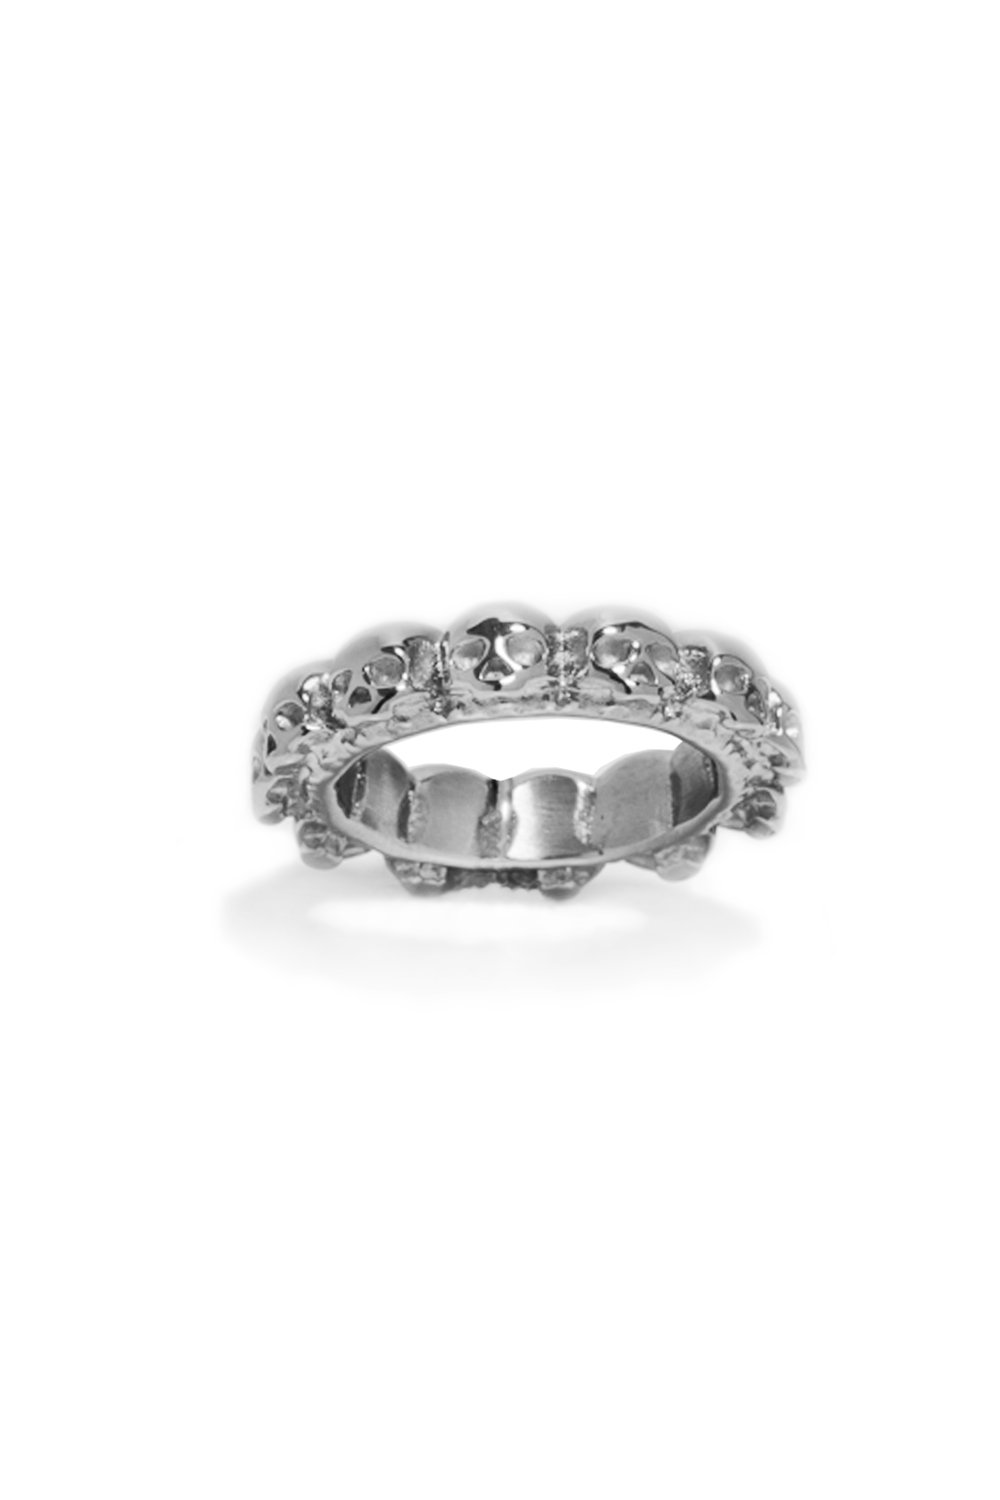 Image of "SkullBand" ring 